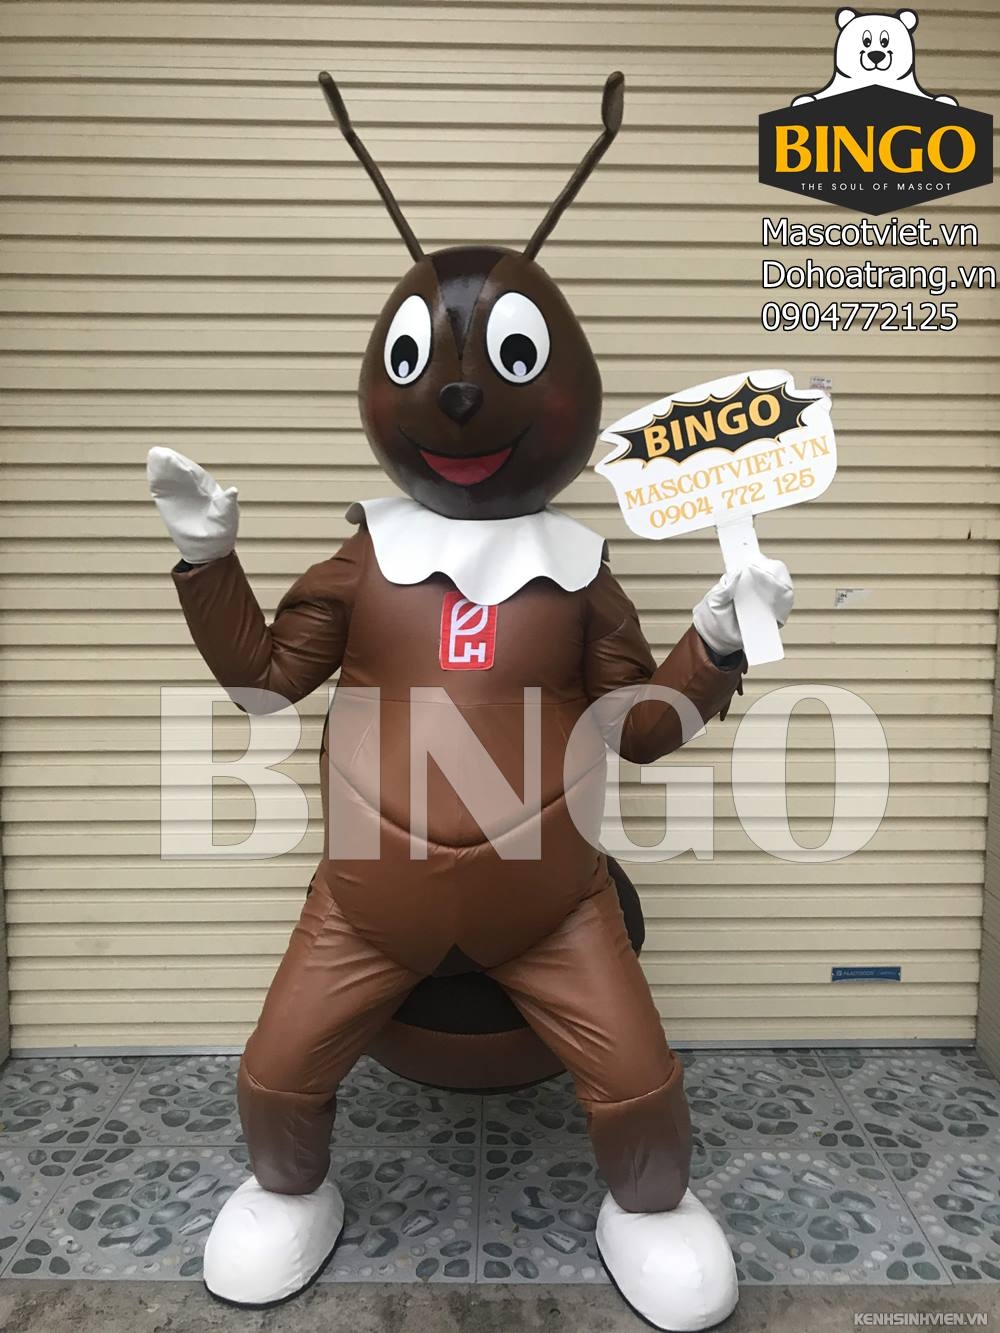 mascot-con-kien-01-bingo-costumes-0904772125.jpg